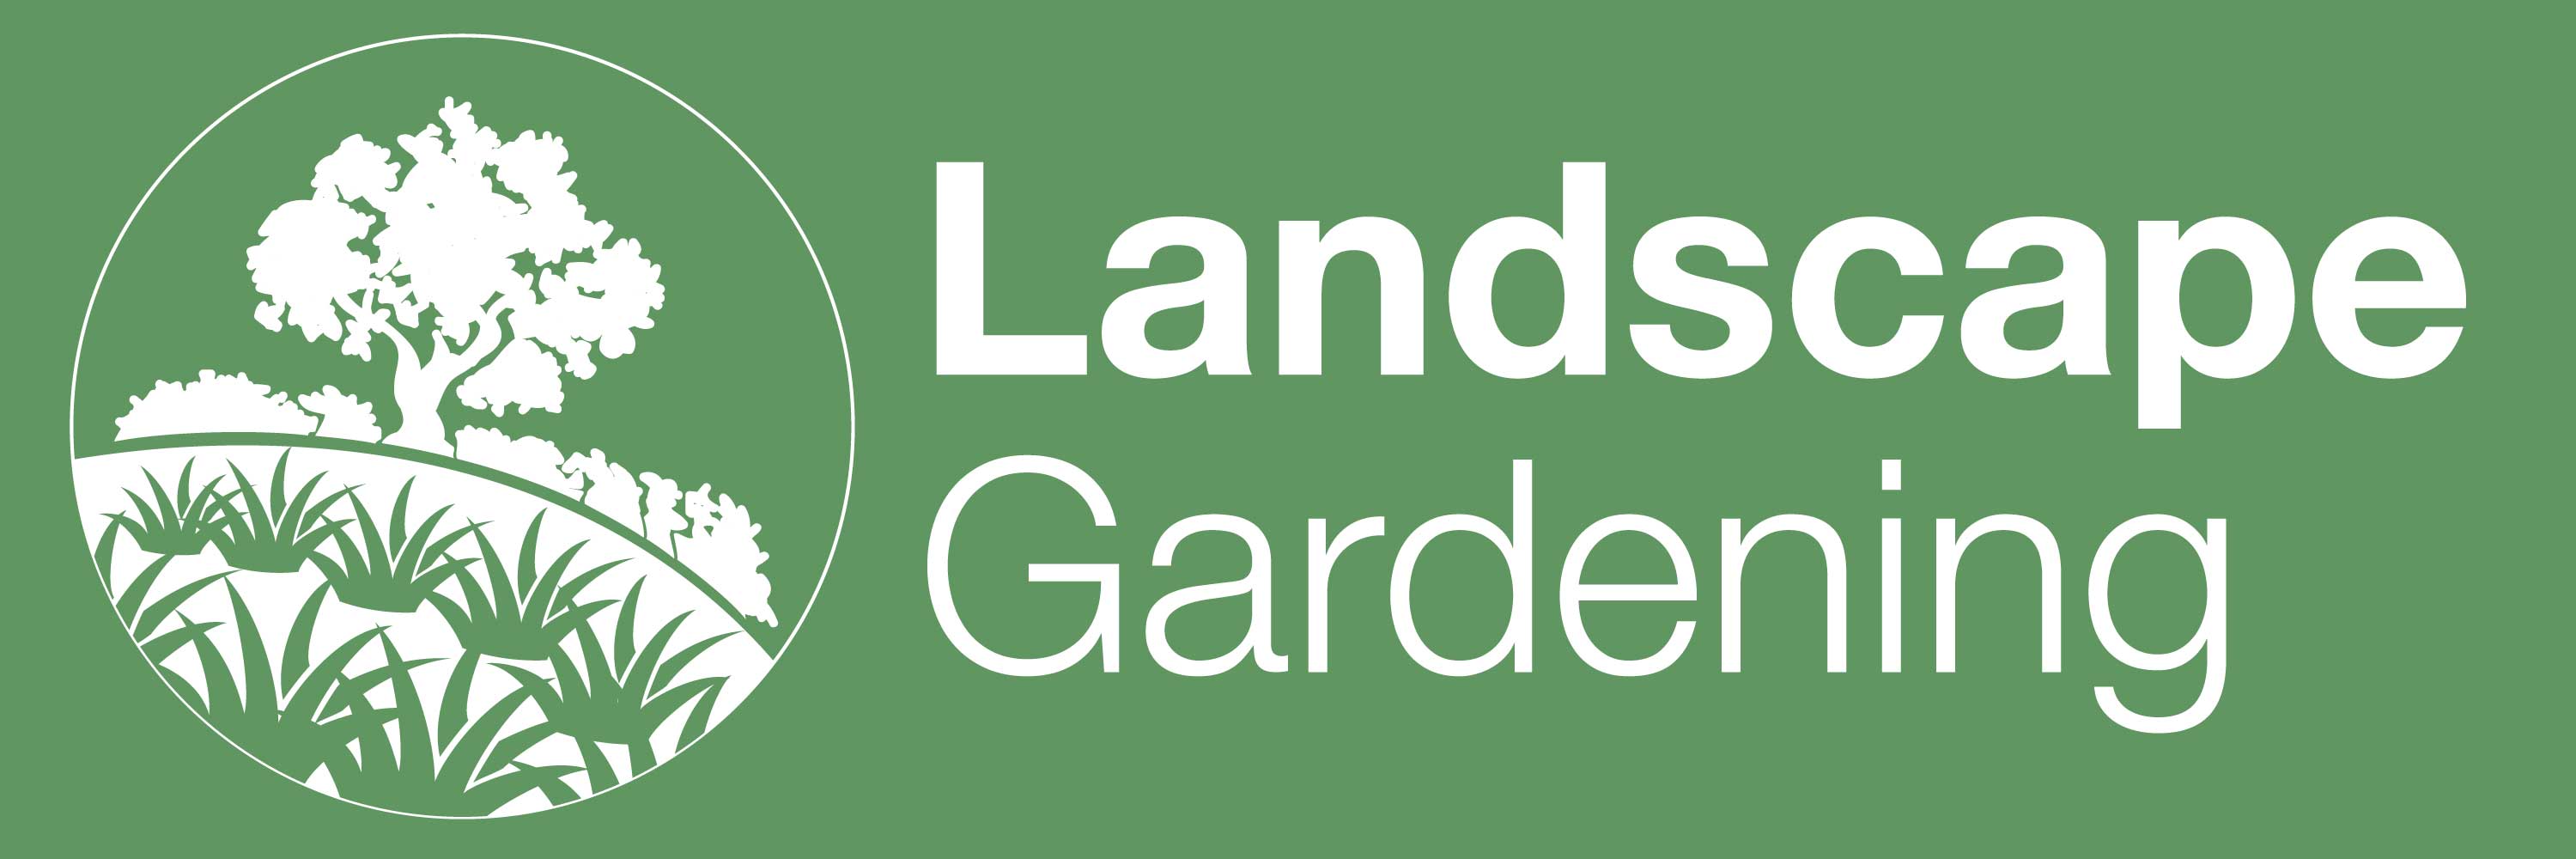 Landscape Gardens Banner